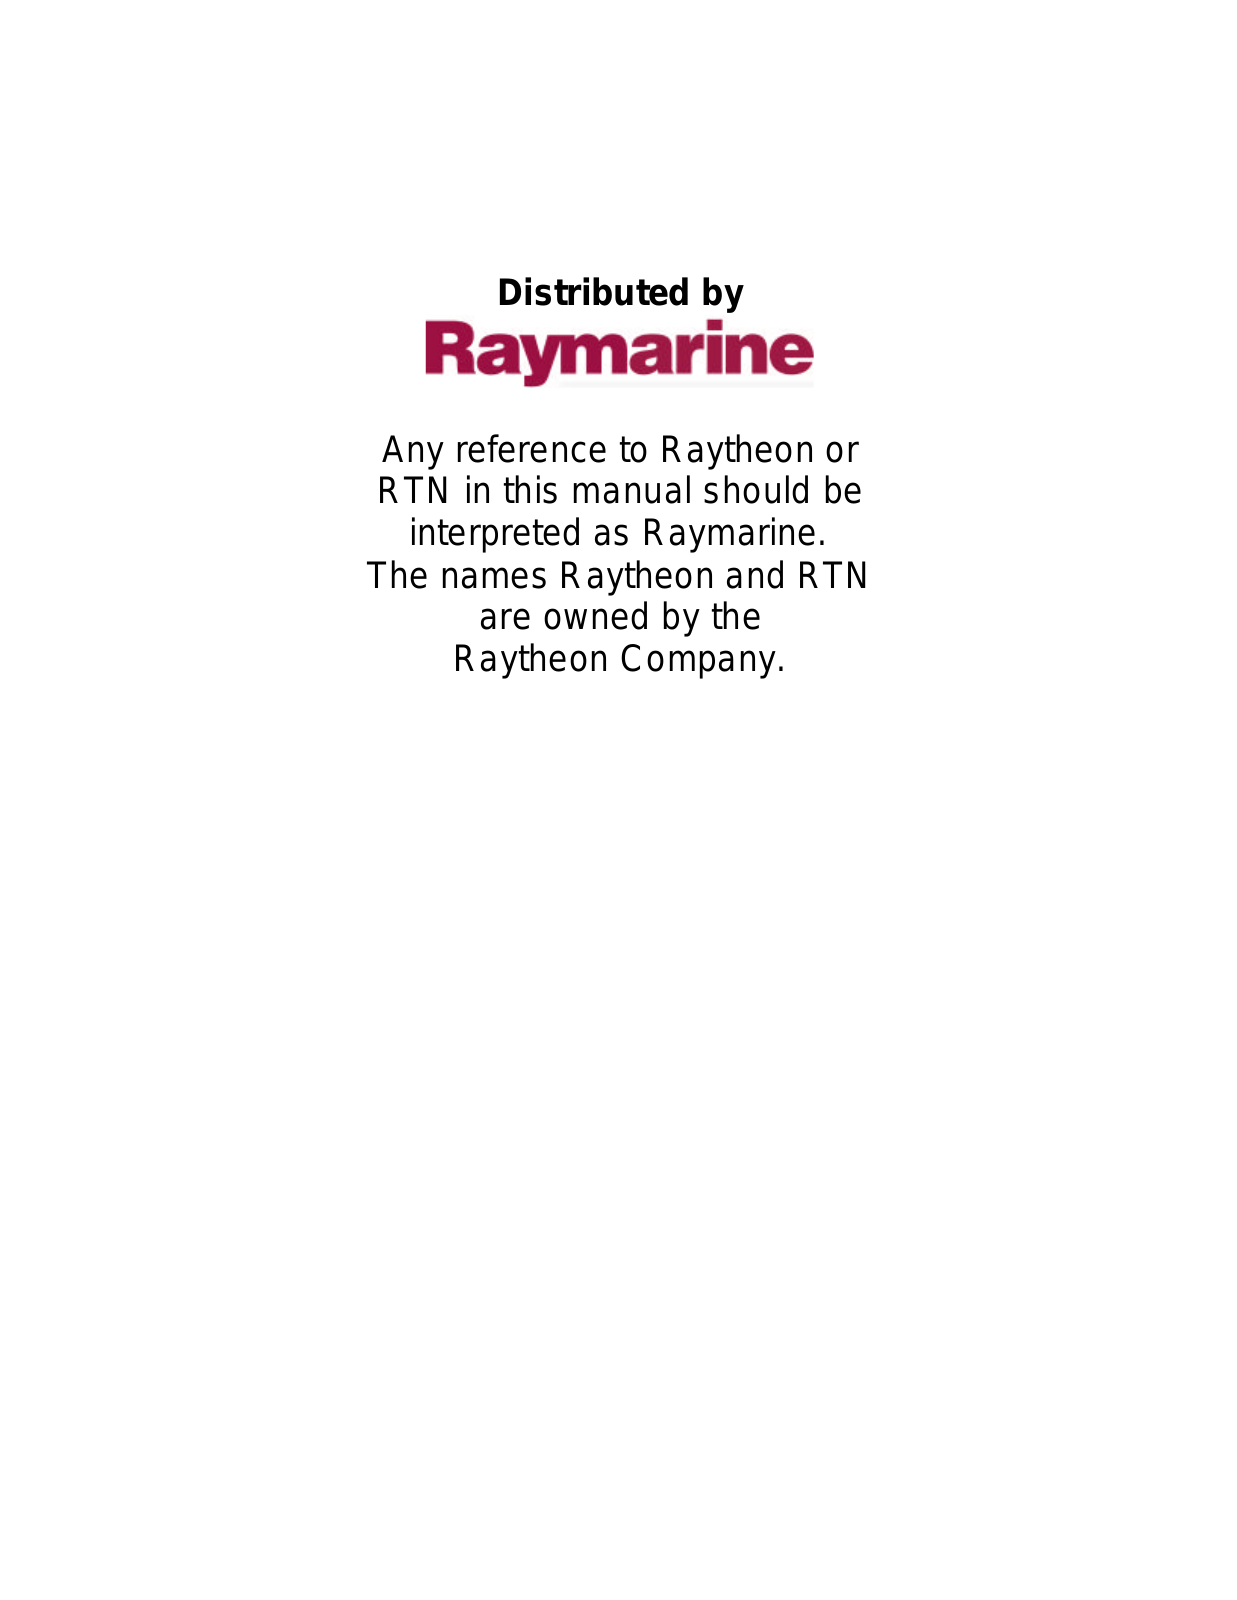 Raymarine APELCO VXL9000 Manual